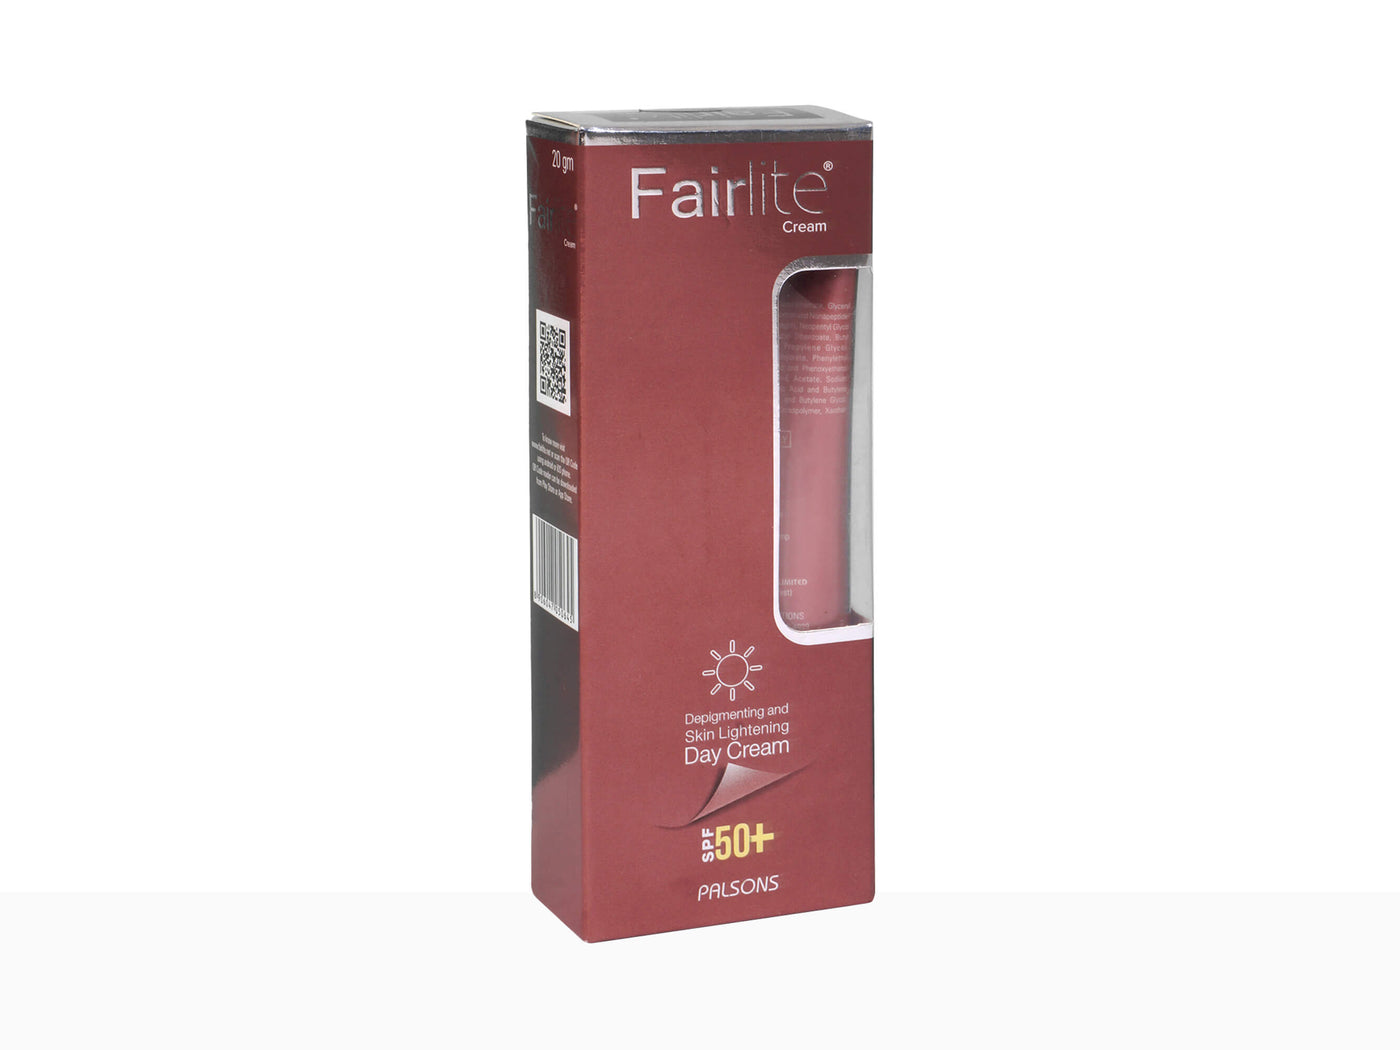 Fairlite cream (depigmenting and skin lightening day cream) - Clinikally